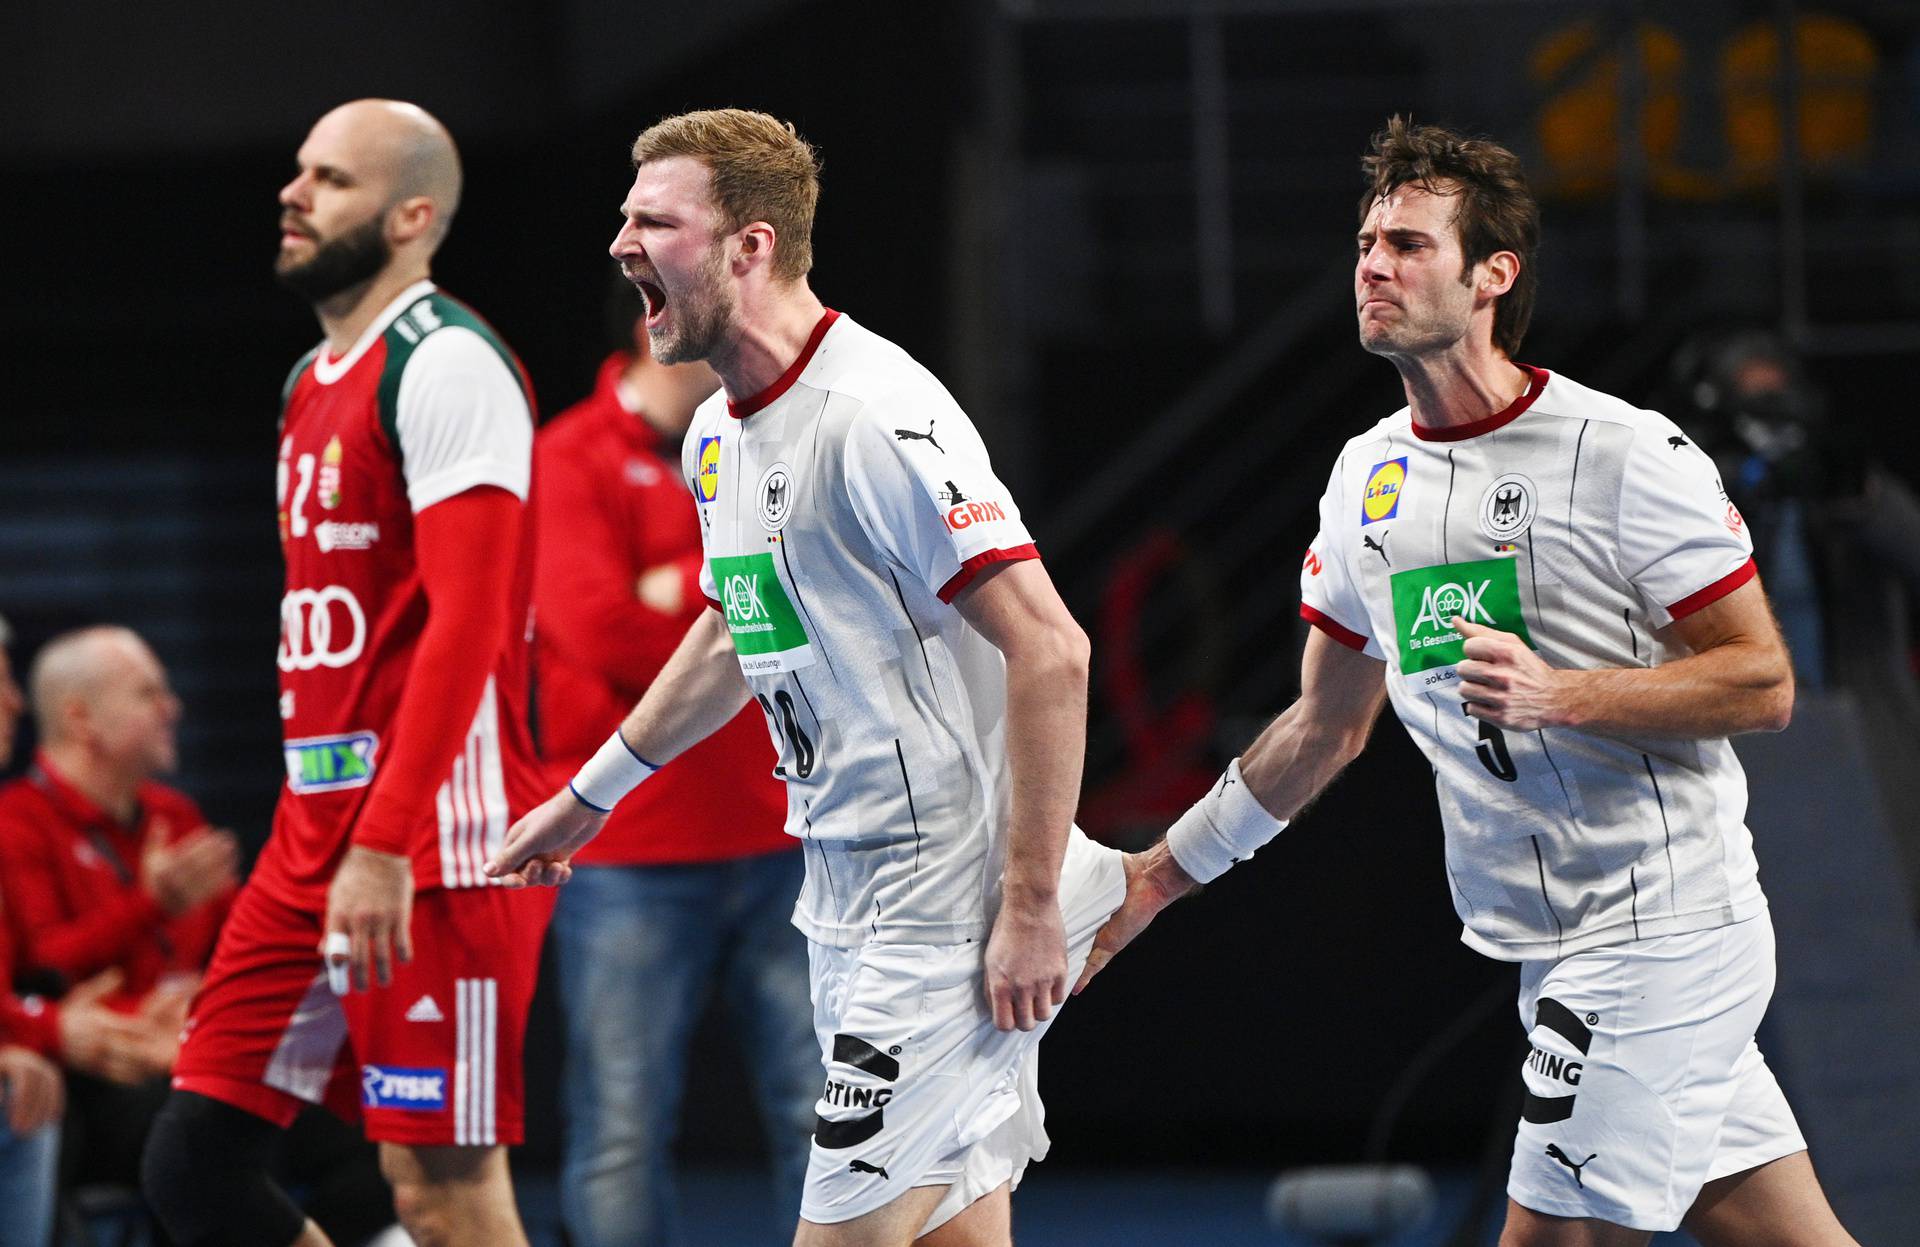 2021 IHF Handball World Championship - Preliminary Round Group A - Germany v Hungary